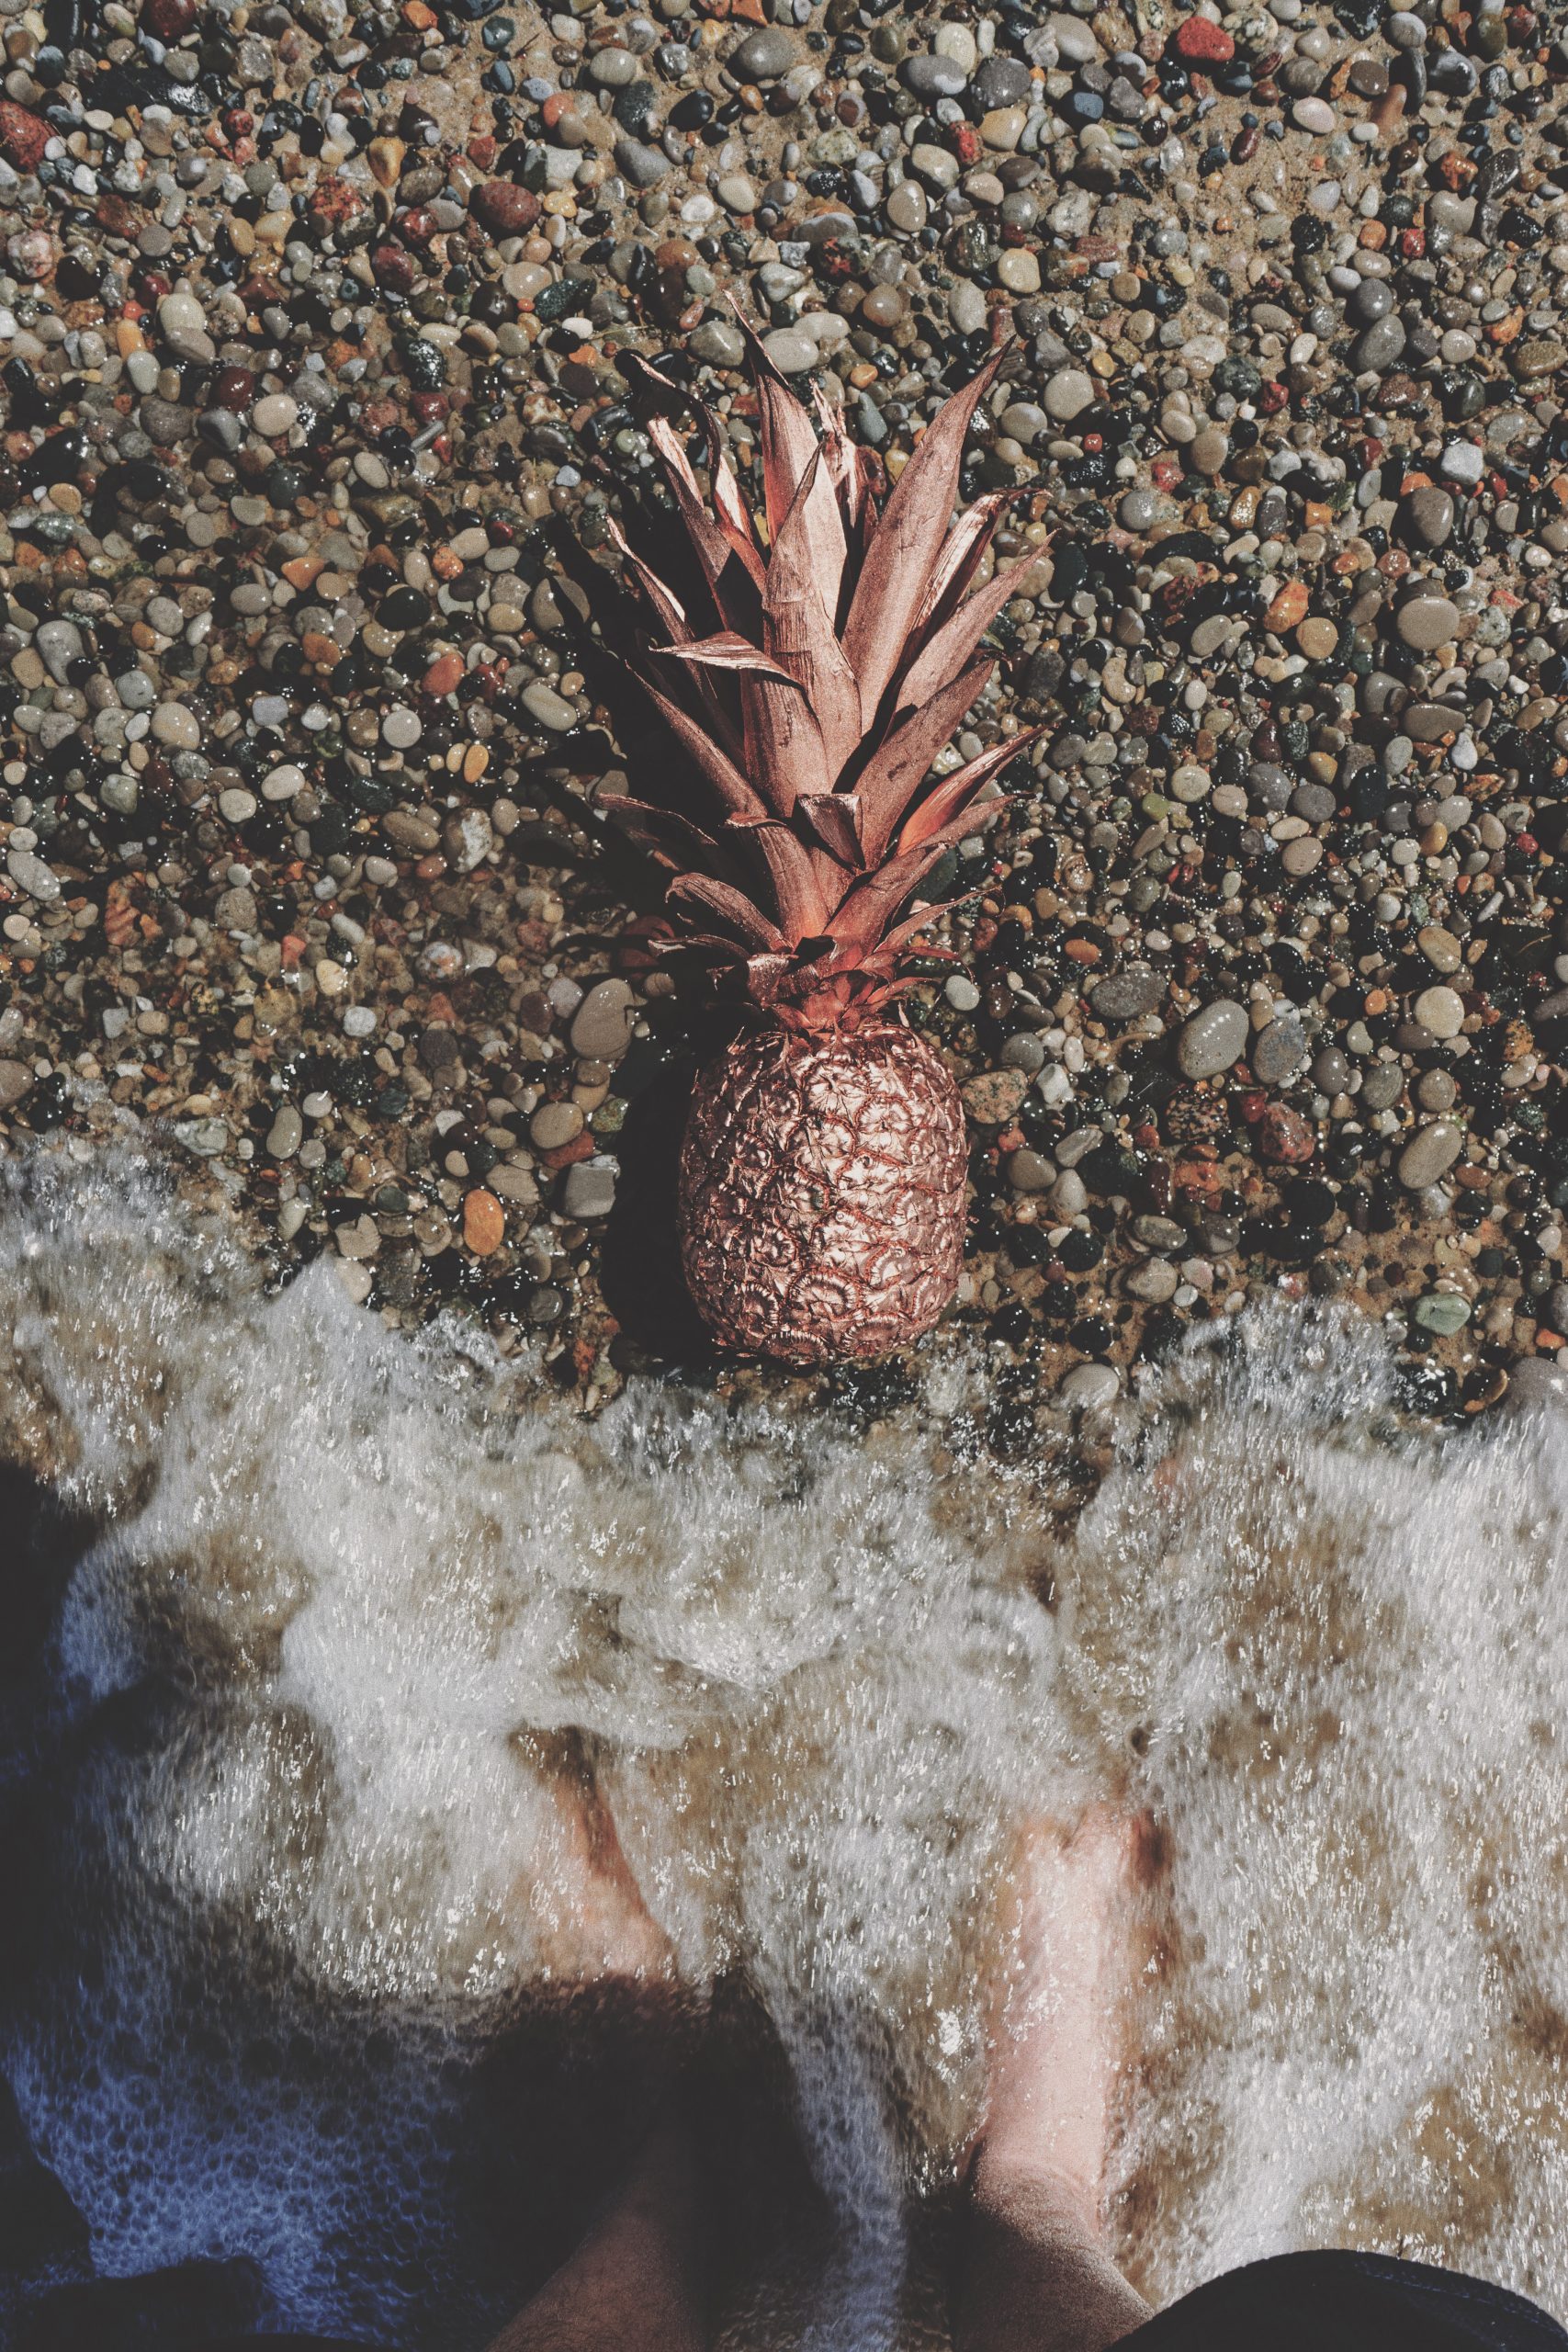 Pink Pineapple On Grey Gravel Near Body Of Water - Wallpaperforu